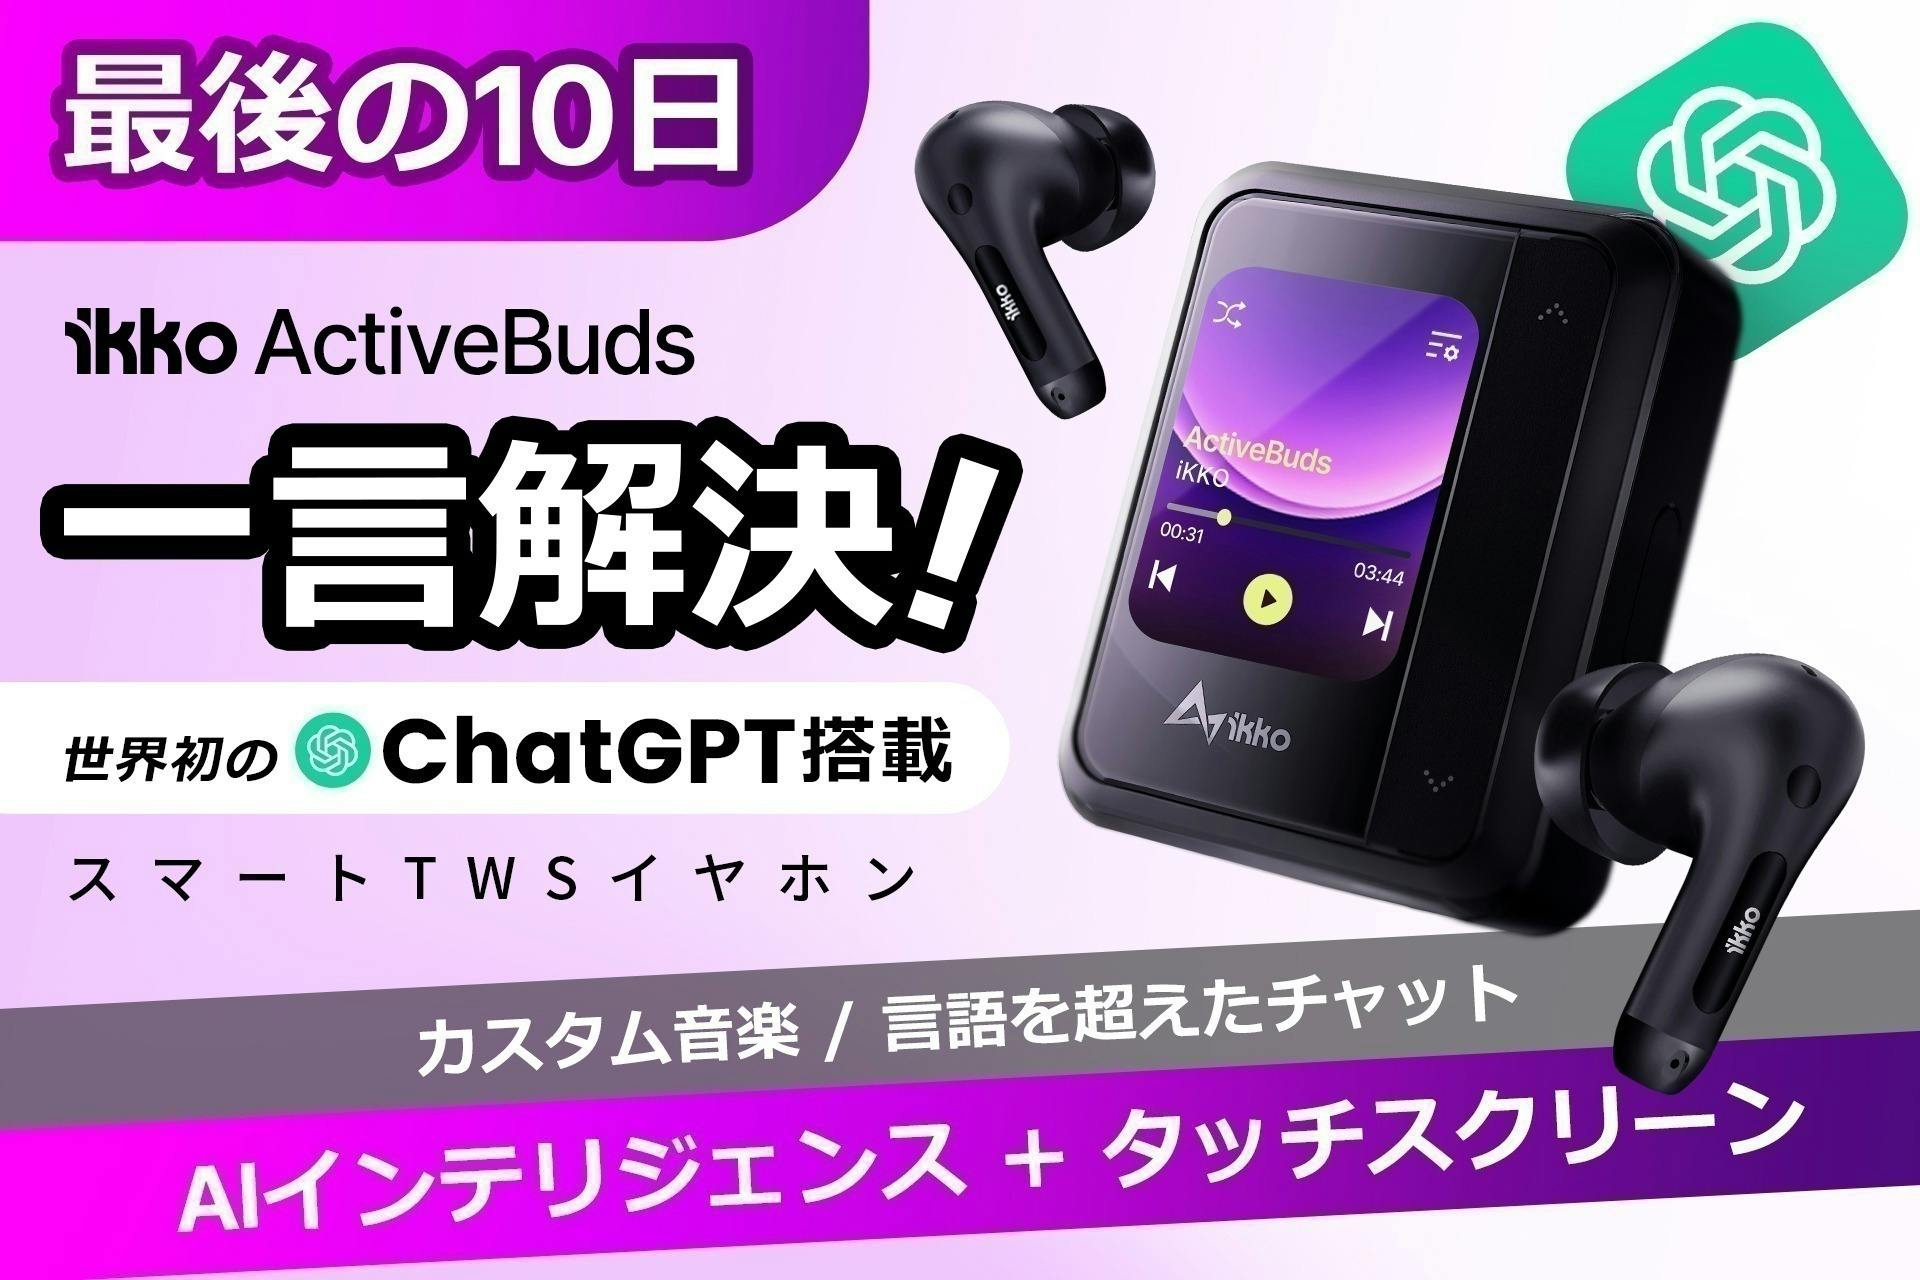 ▪️商品説明IKKO ActiveBuds! CHATGPT搭載多機能音声アシスタント